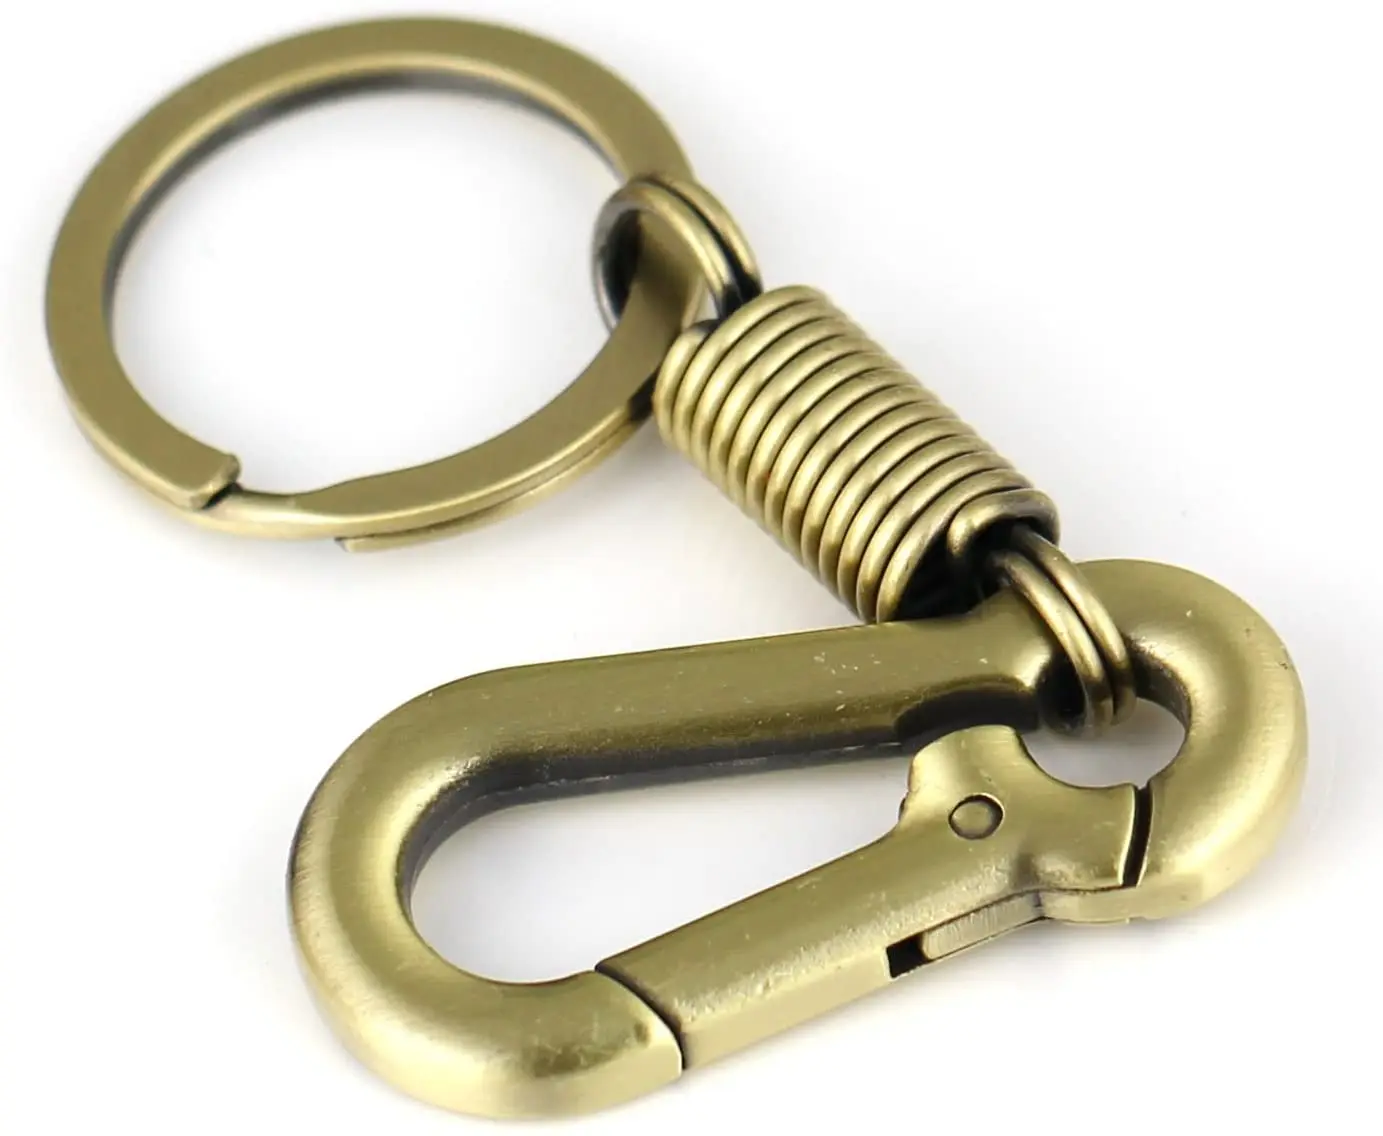 HebeTop Retro Style Simple Strong Carabiner Shape Keychain Key Chain Ring Keyring Keyfob Key Holder 